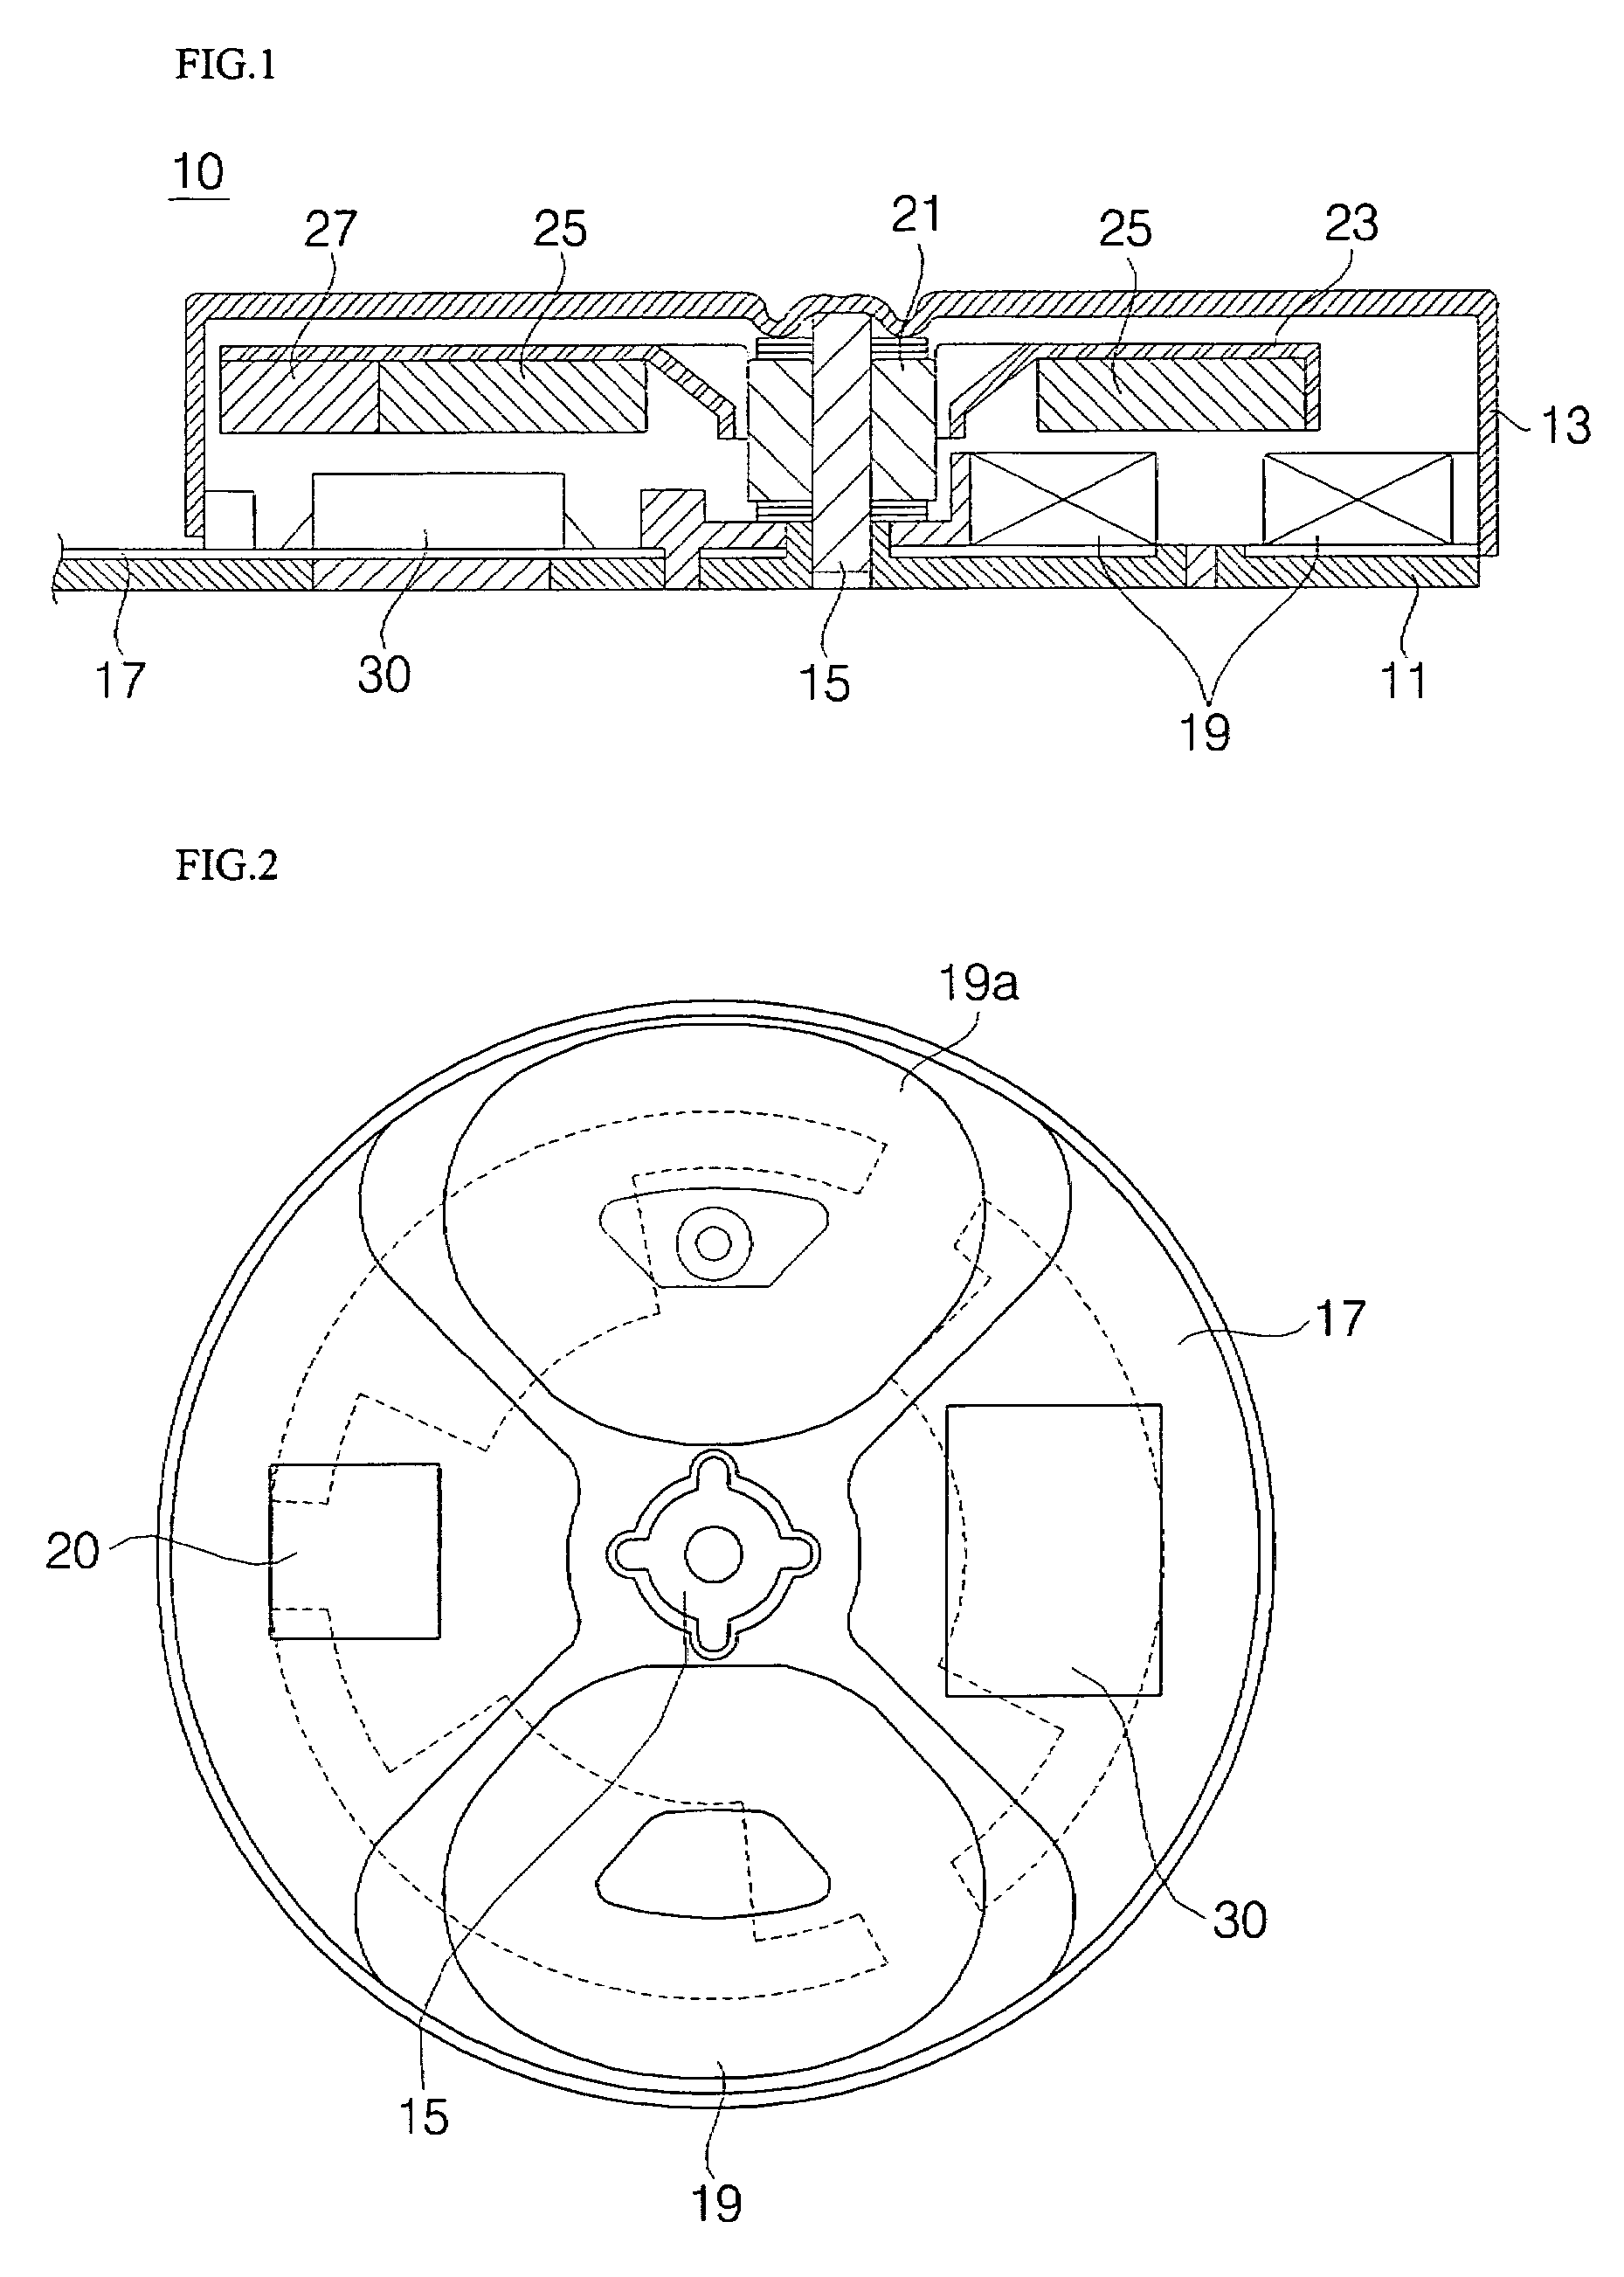 Flat type vibrating motor